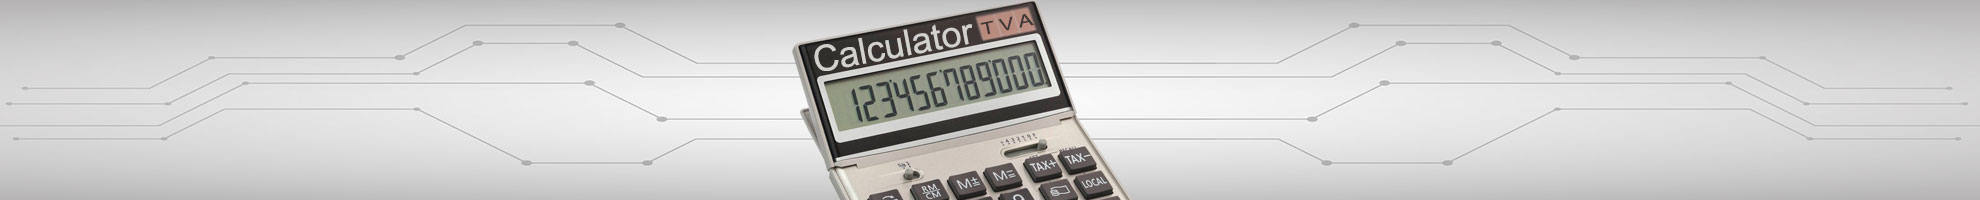 calculator tva